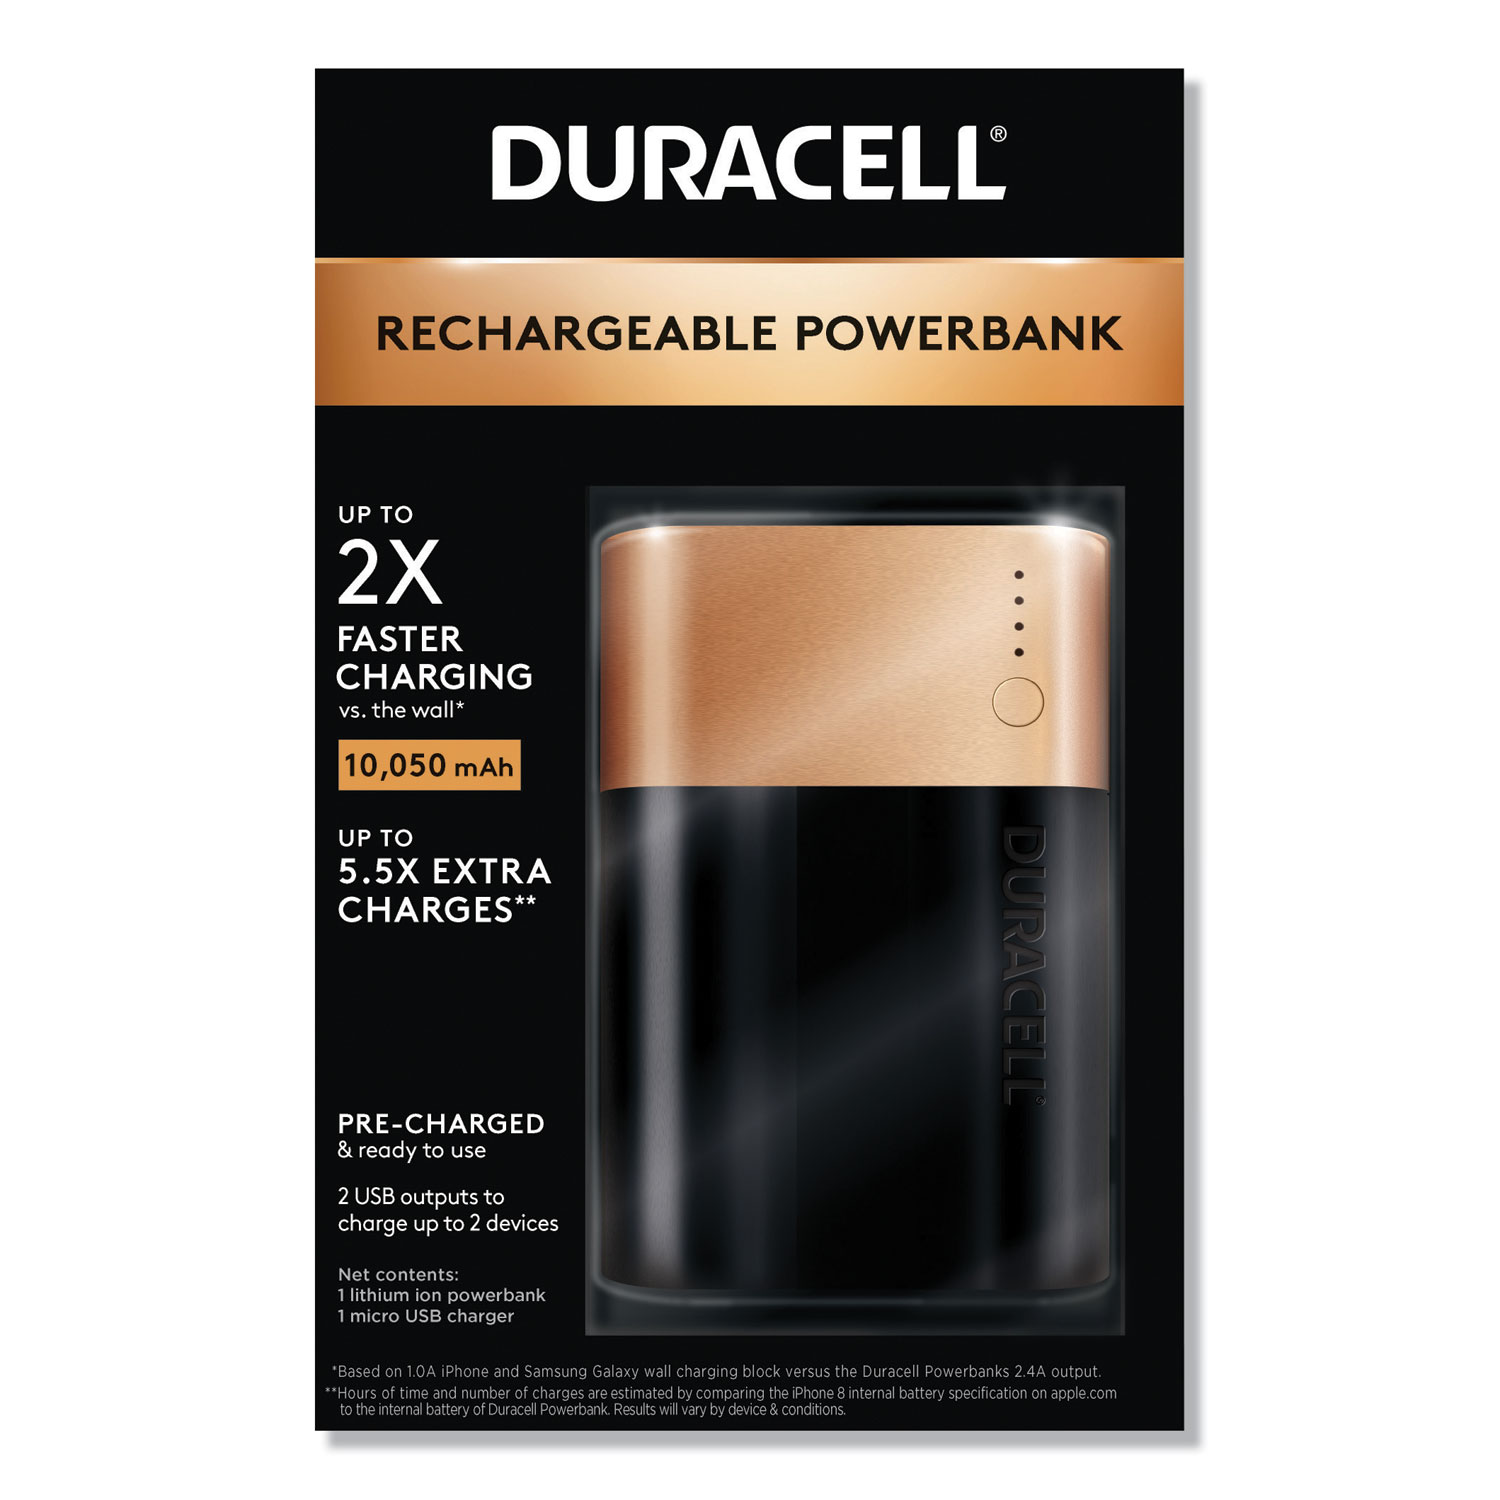  Duracell DMLIONPB3 Rechargeable 10050 mAh Powerbank, 3 Day Portable Charger (DURDMLIONPB3) 